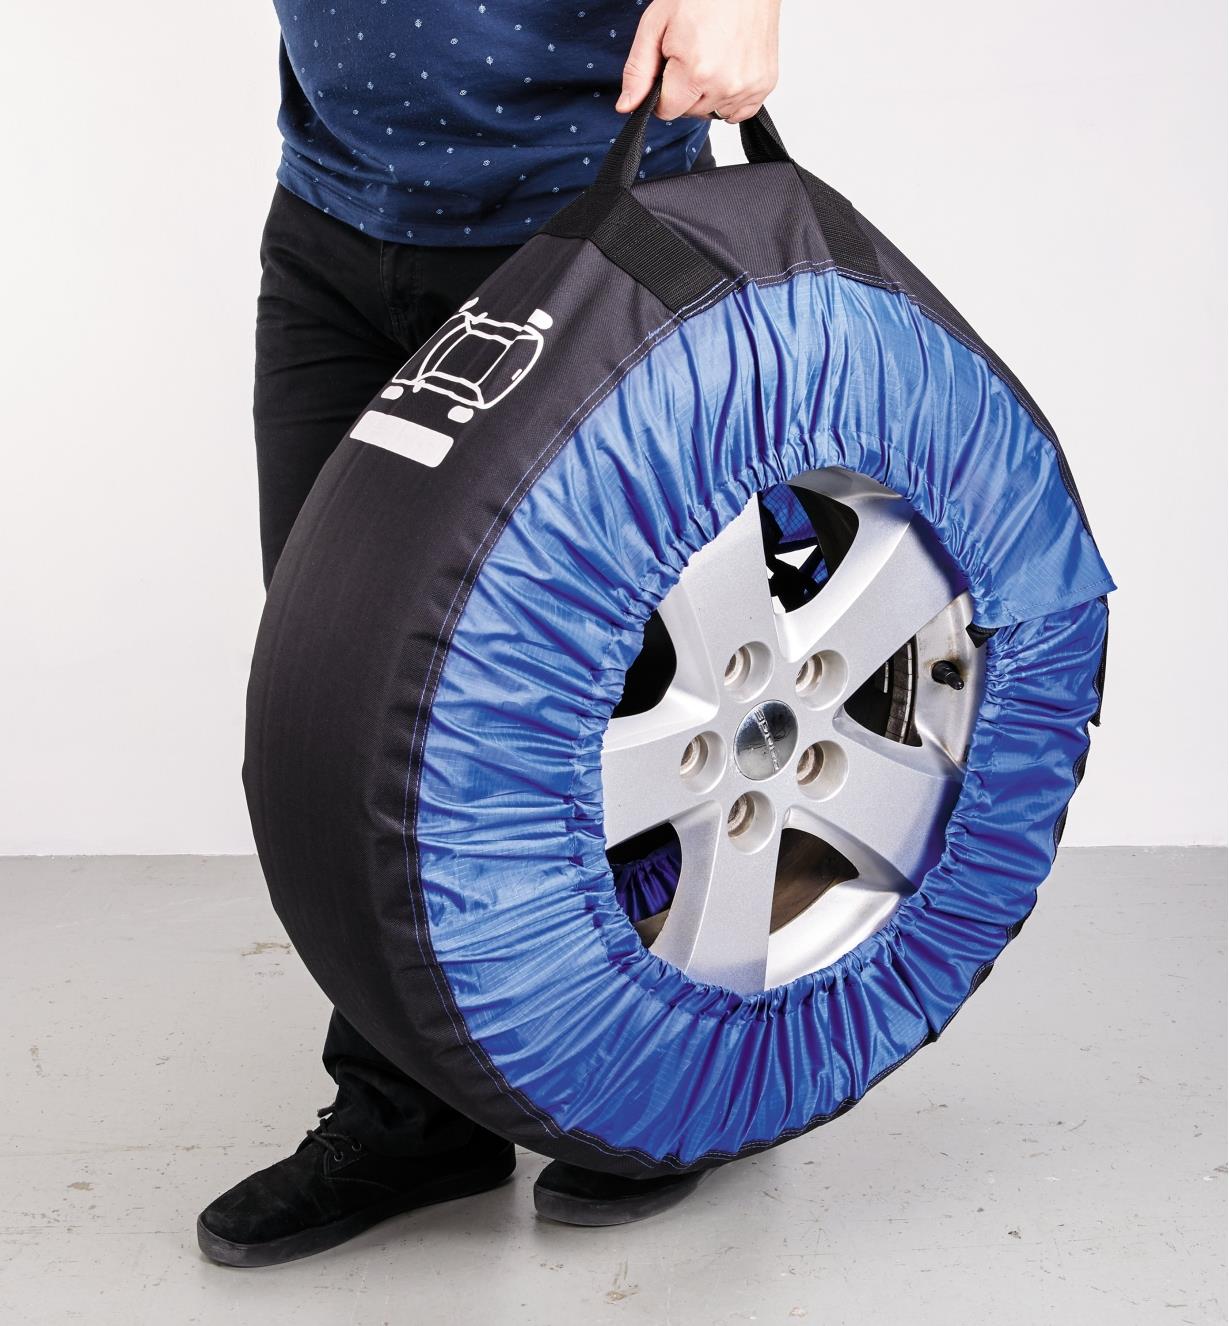 A man carries a tire in a tire bag